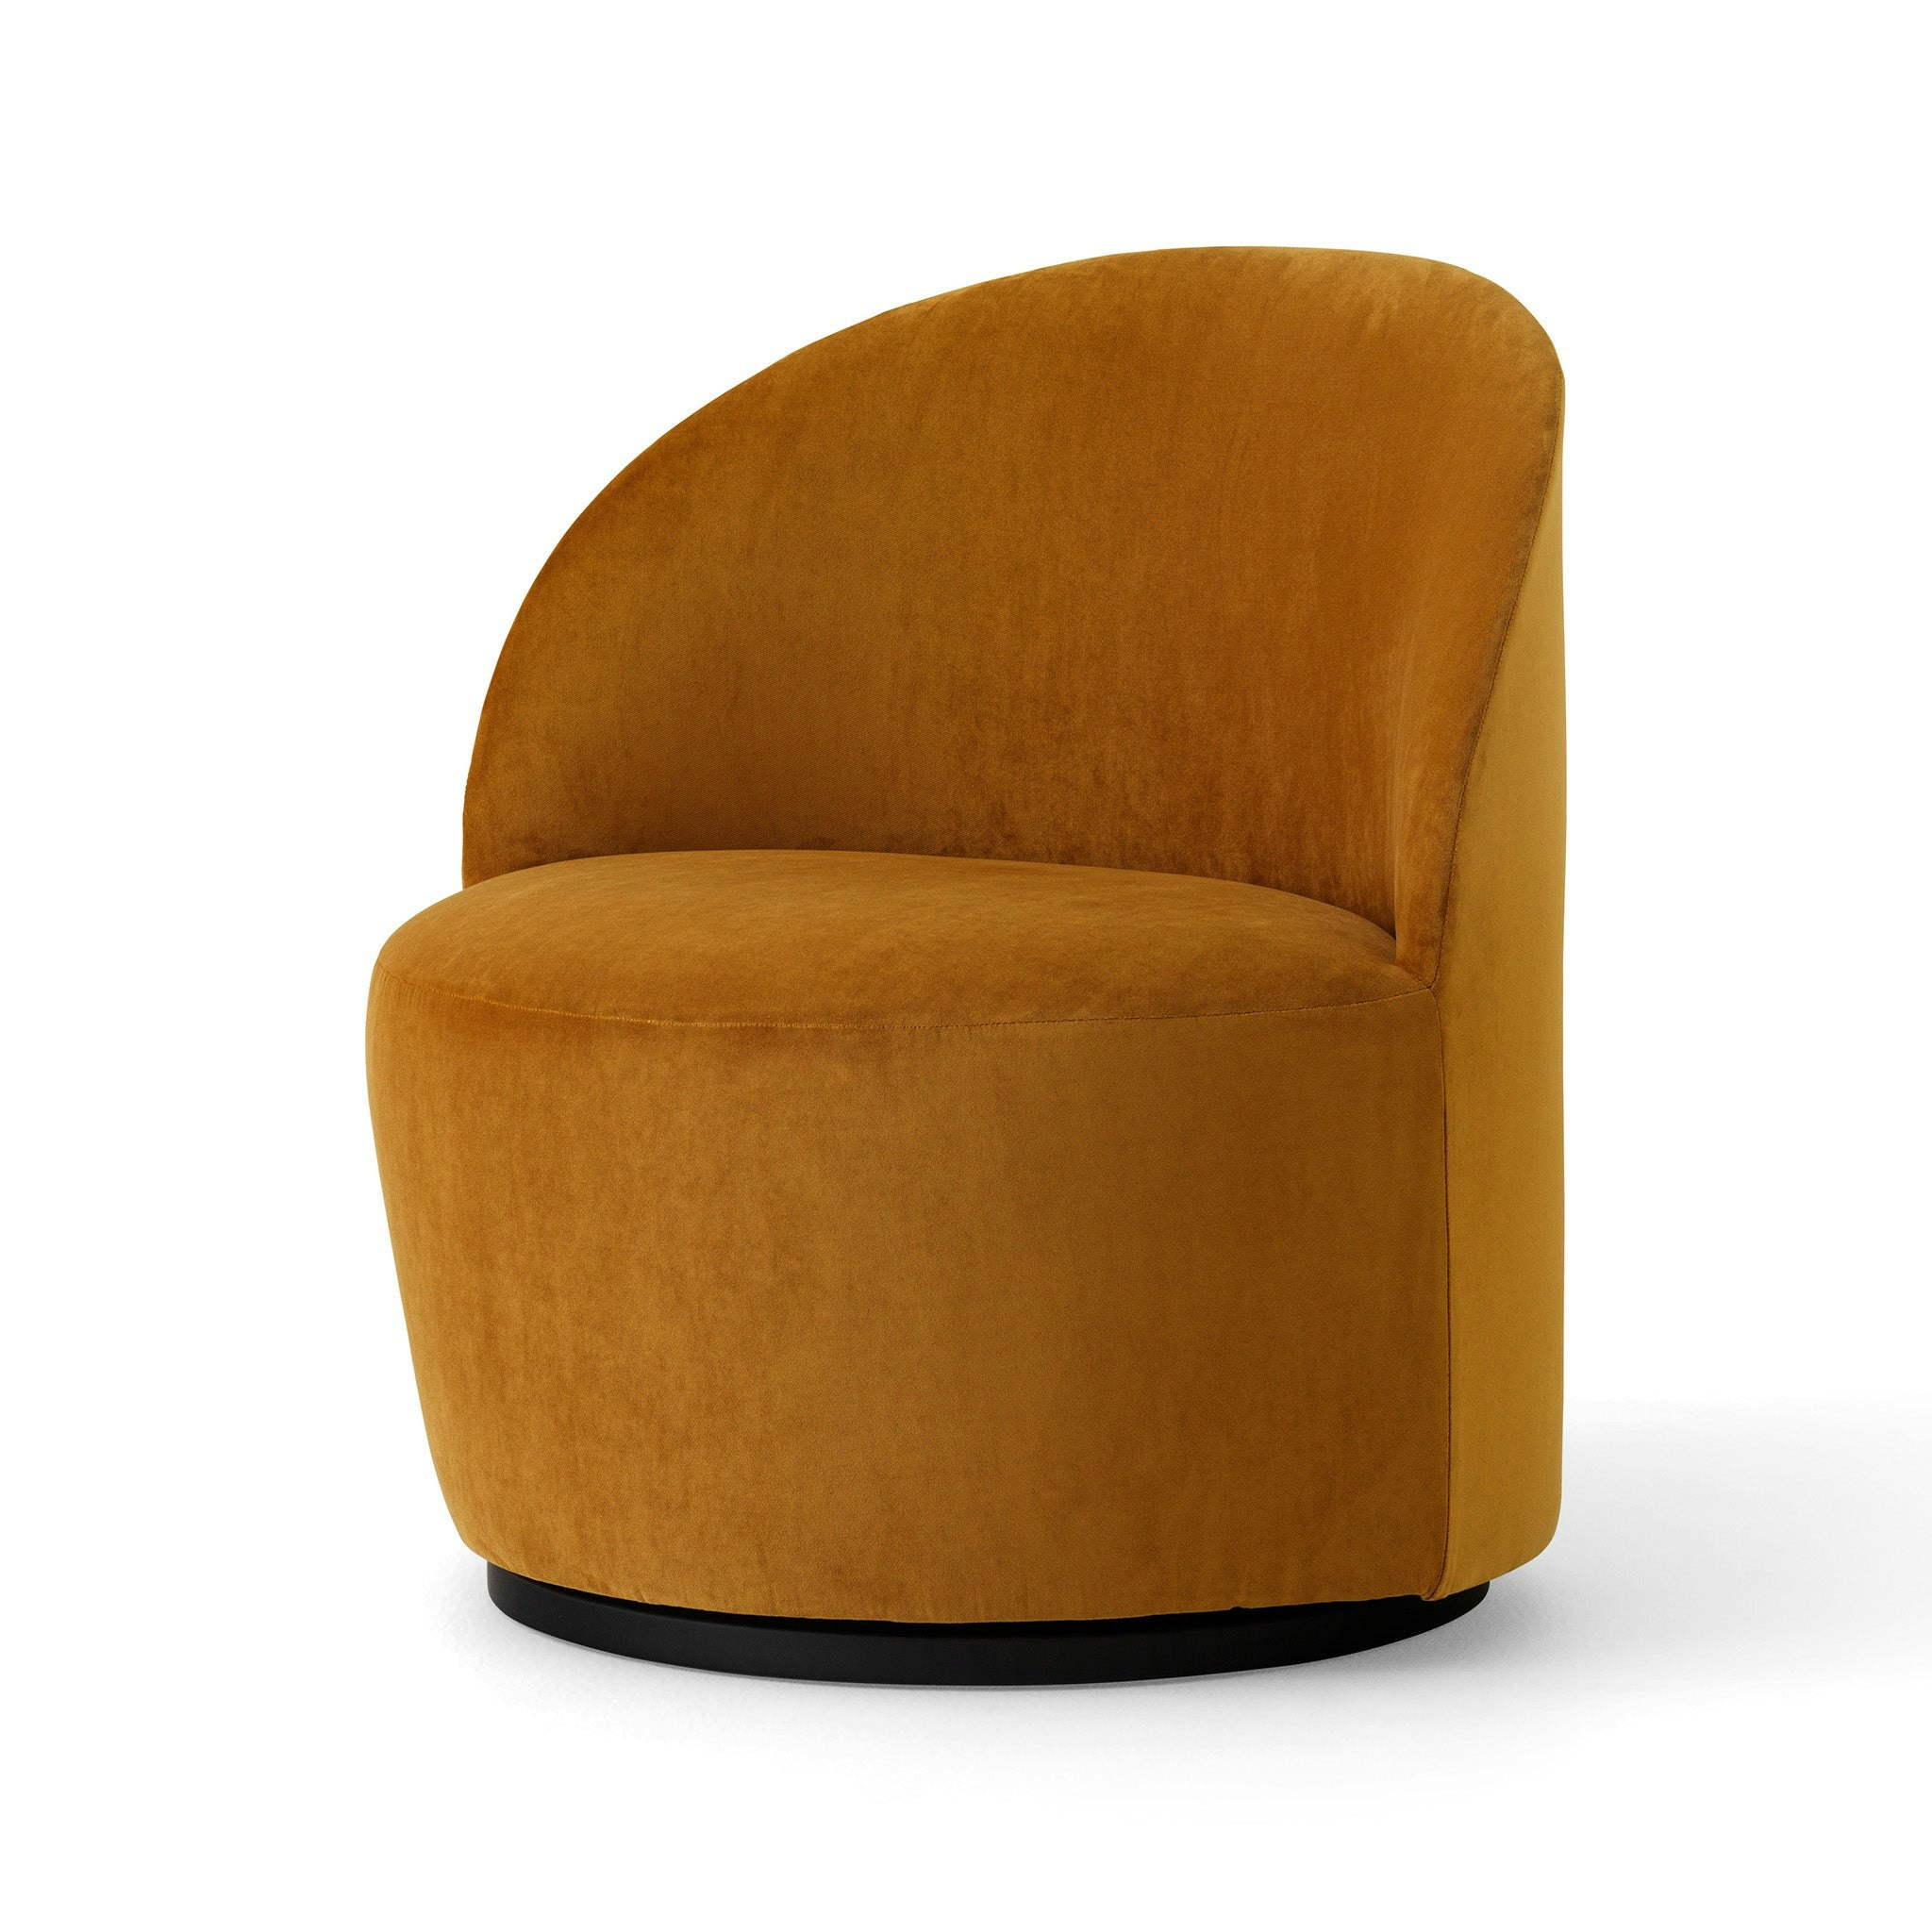 Tearoom Lounge Chair Swivel With Return By Menu